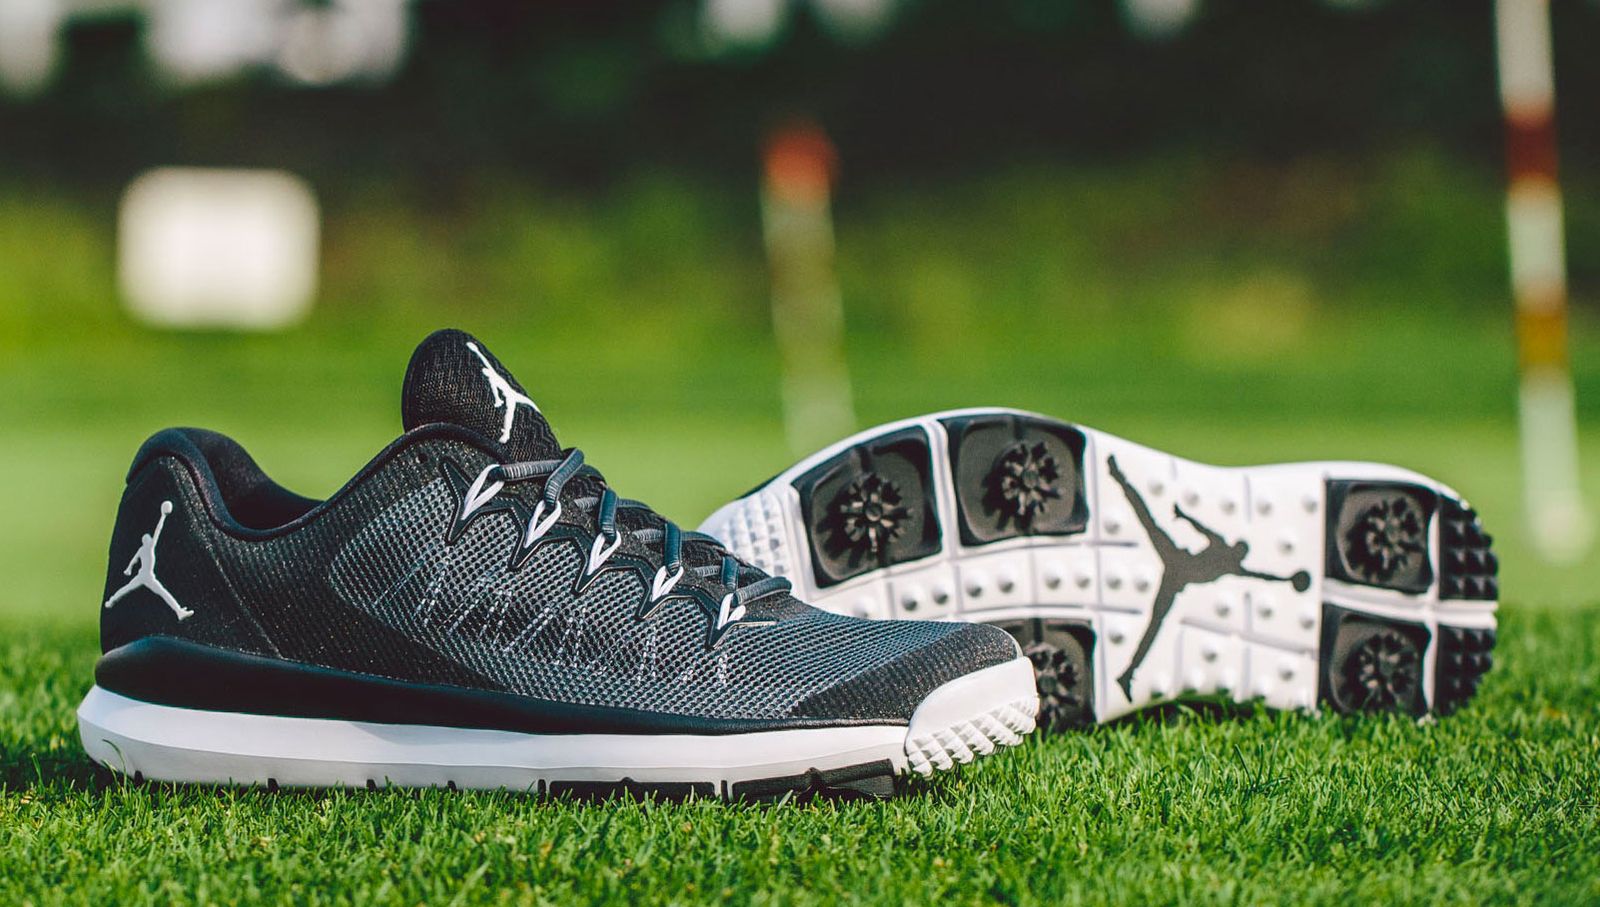 Jordan Flight Runner Golf product image of a pair of black and dark grey golf cleats.